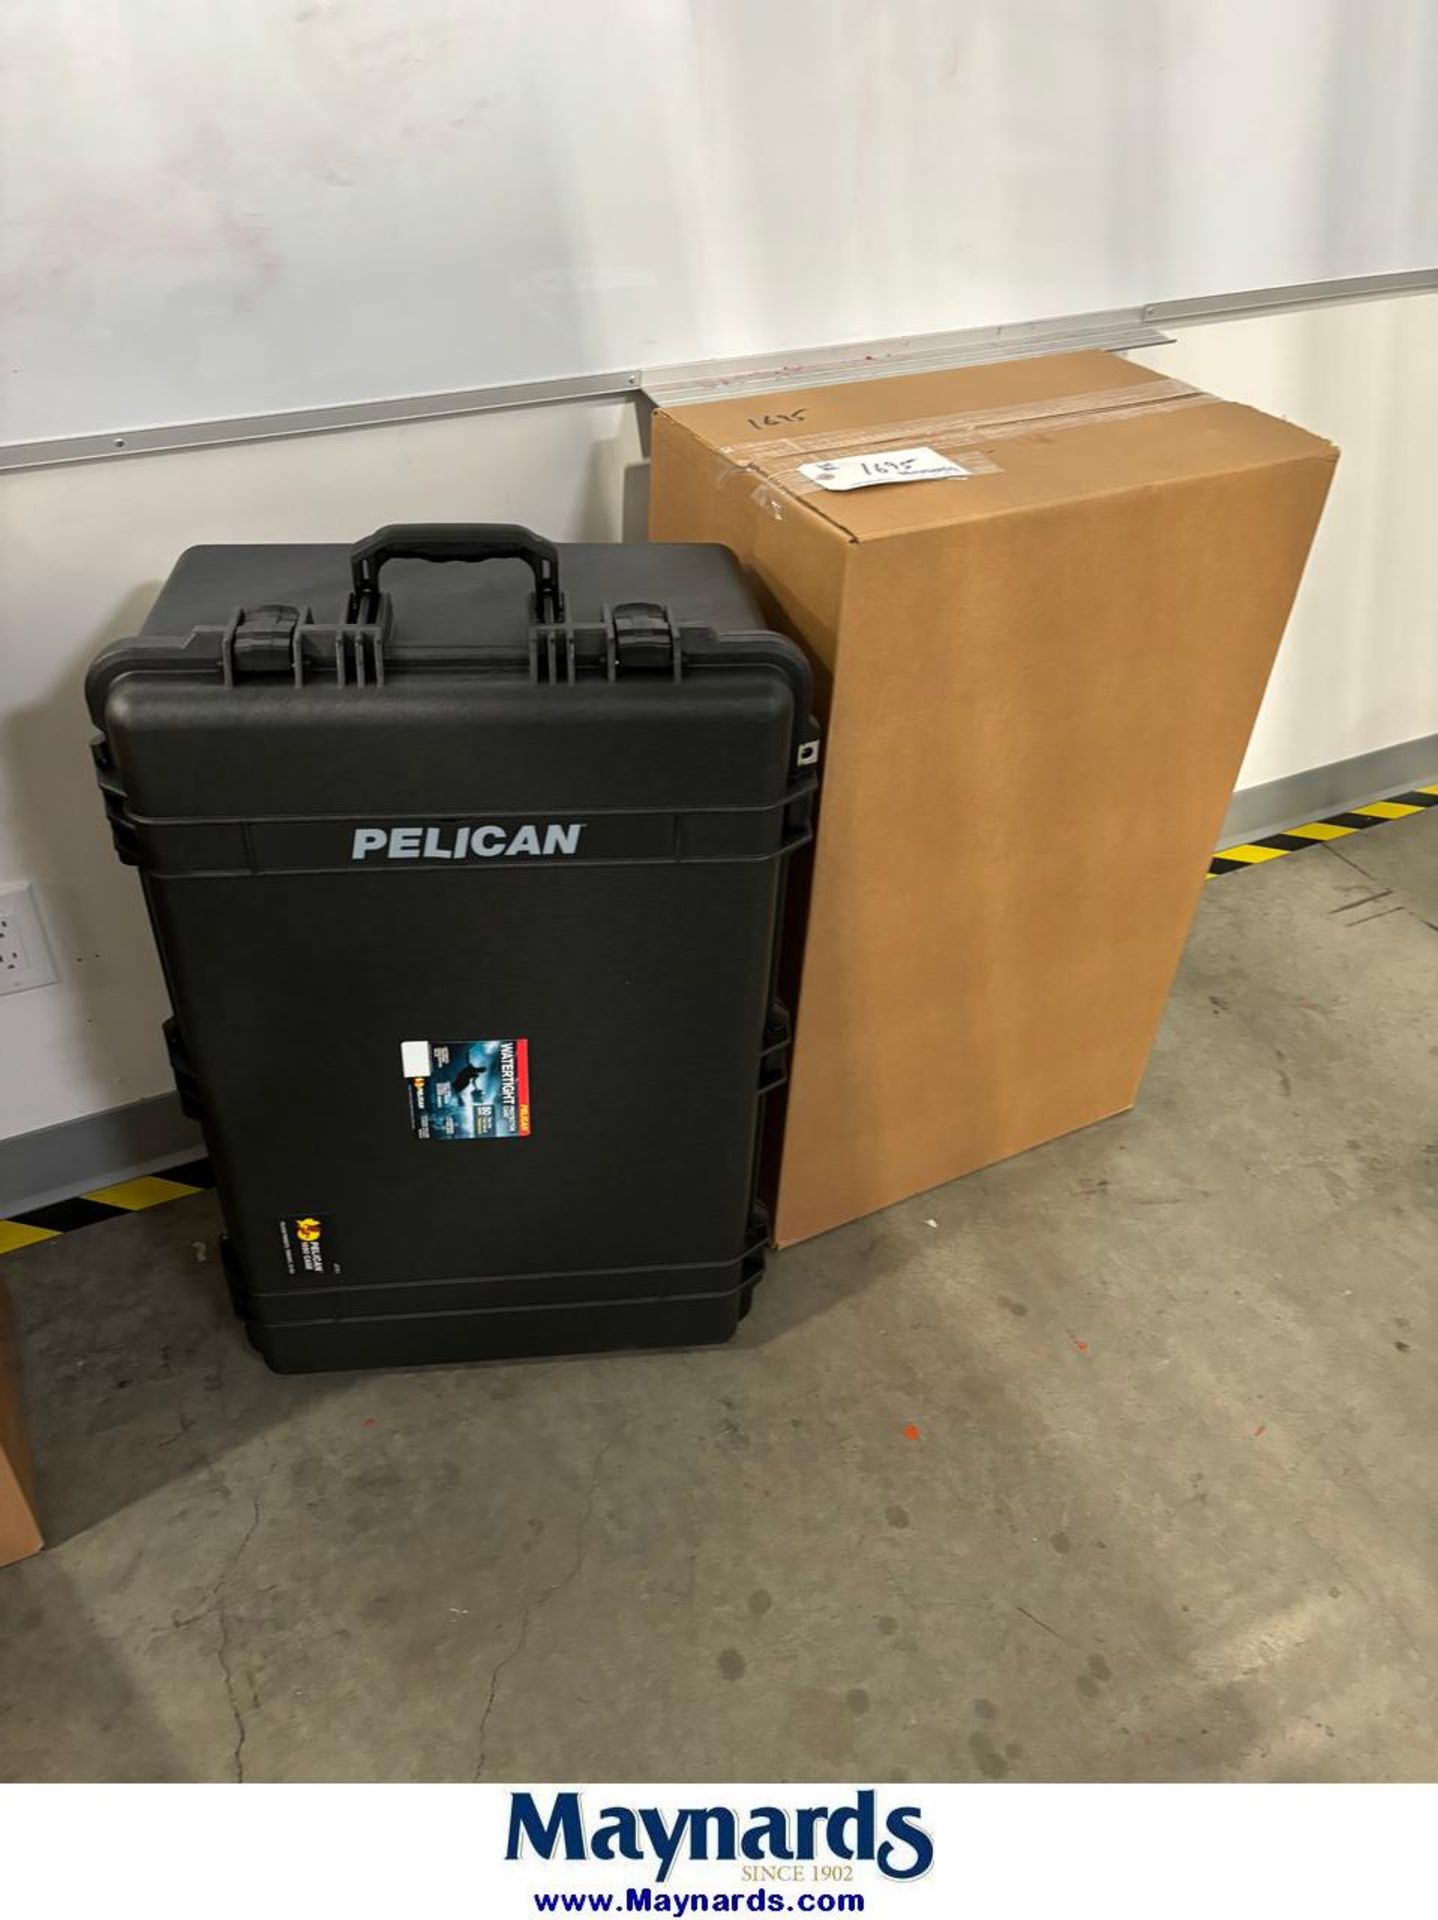 Pelican 1650 cases new in box